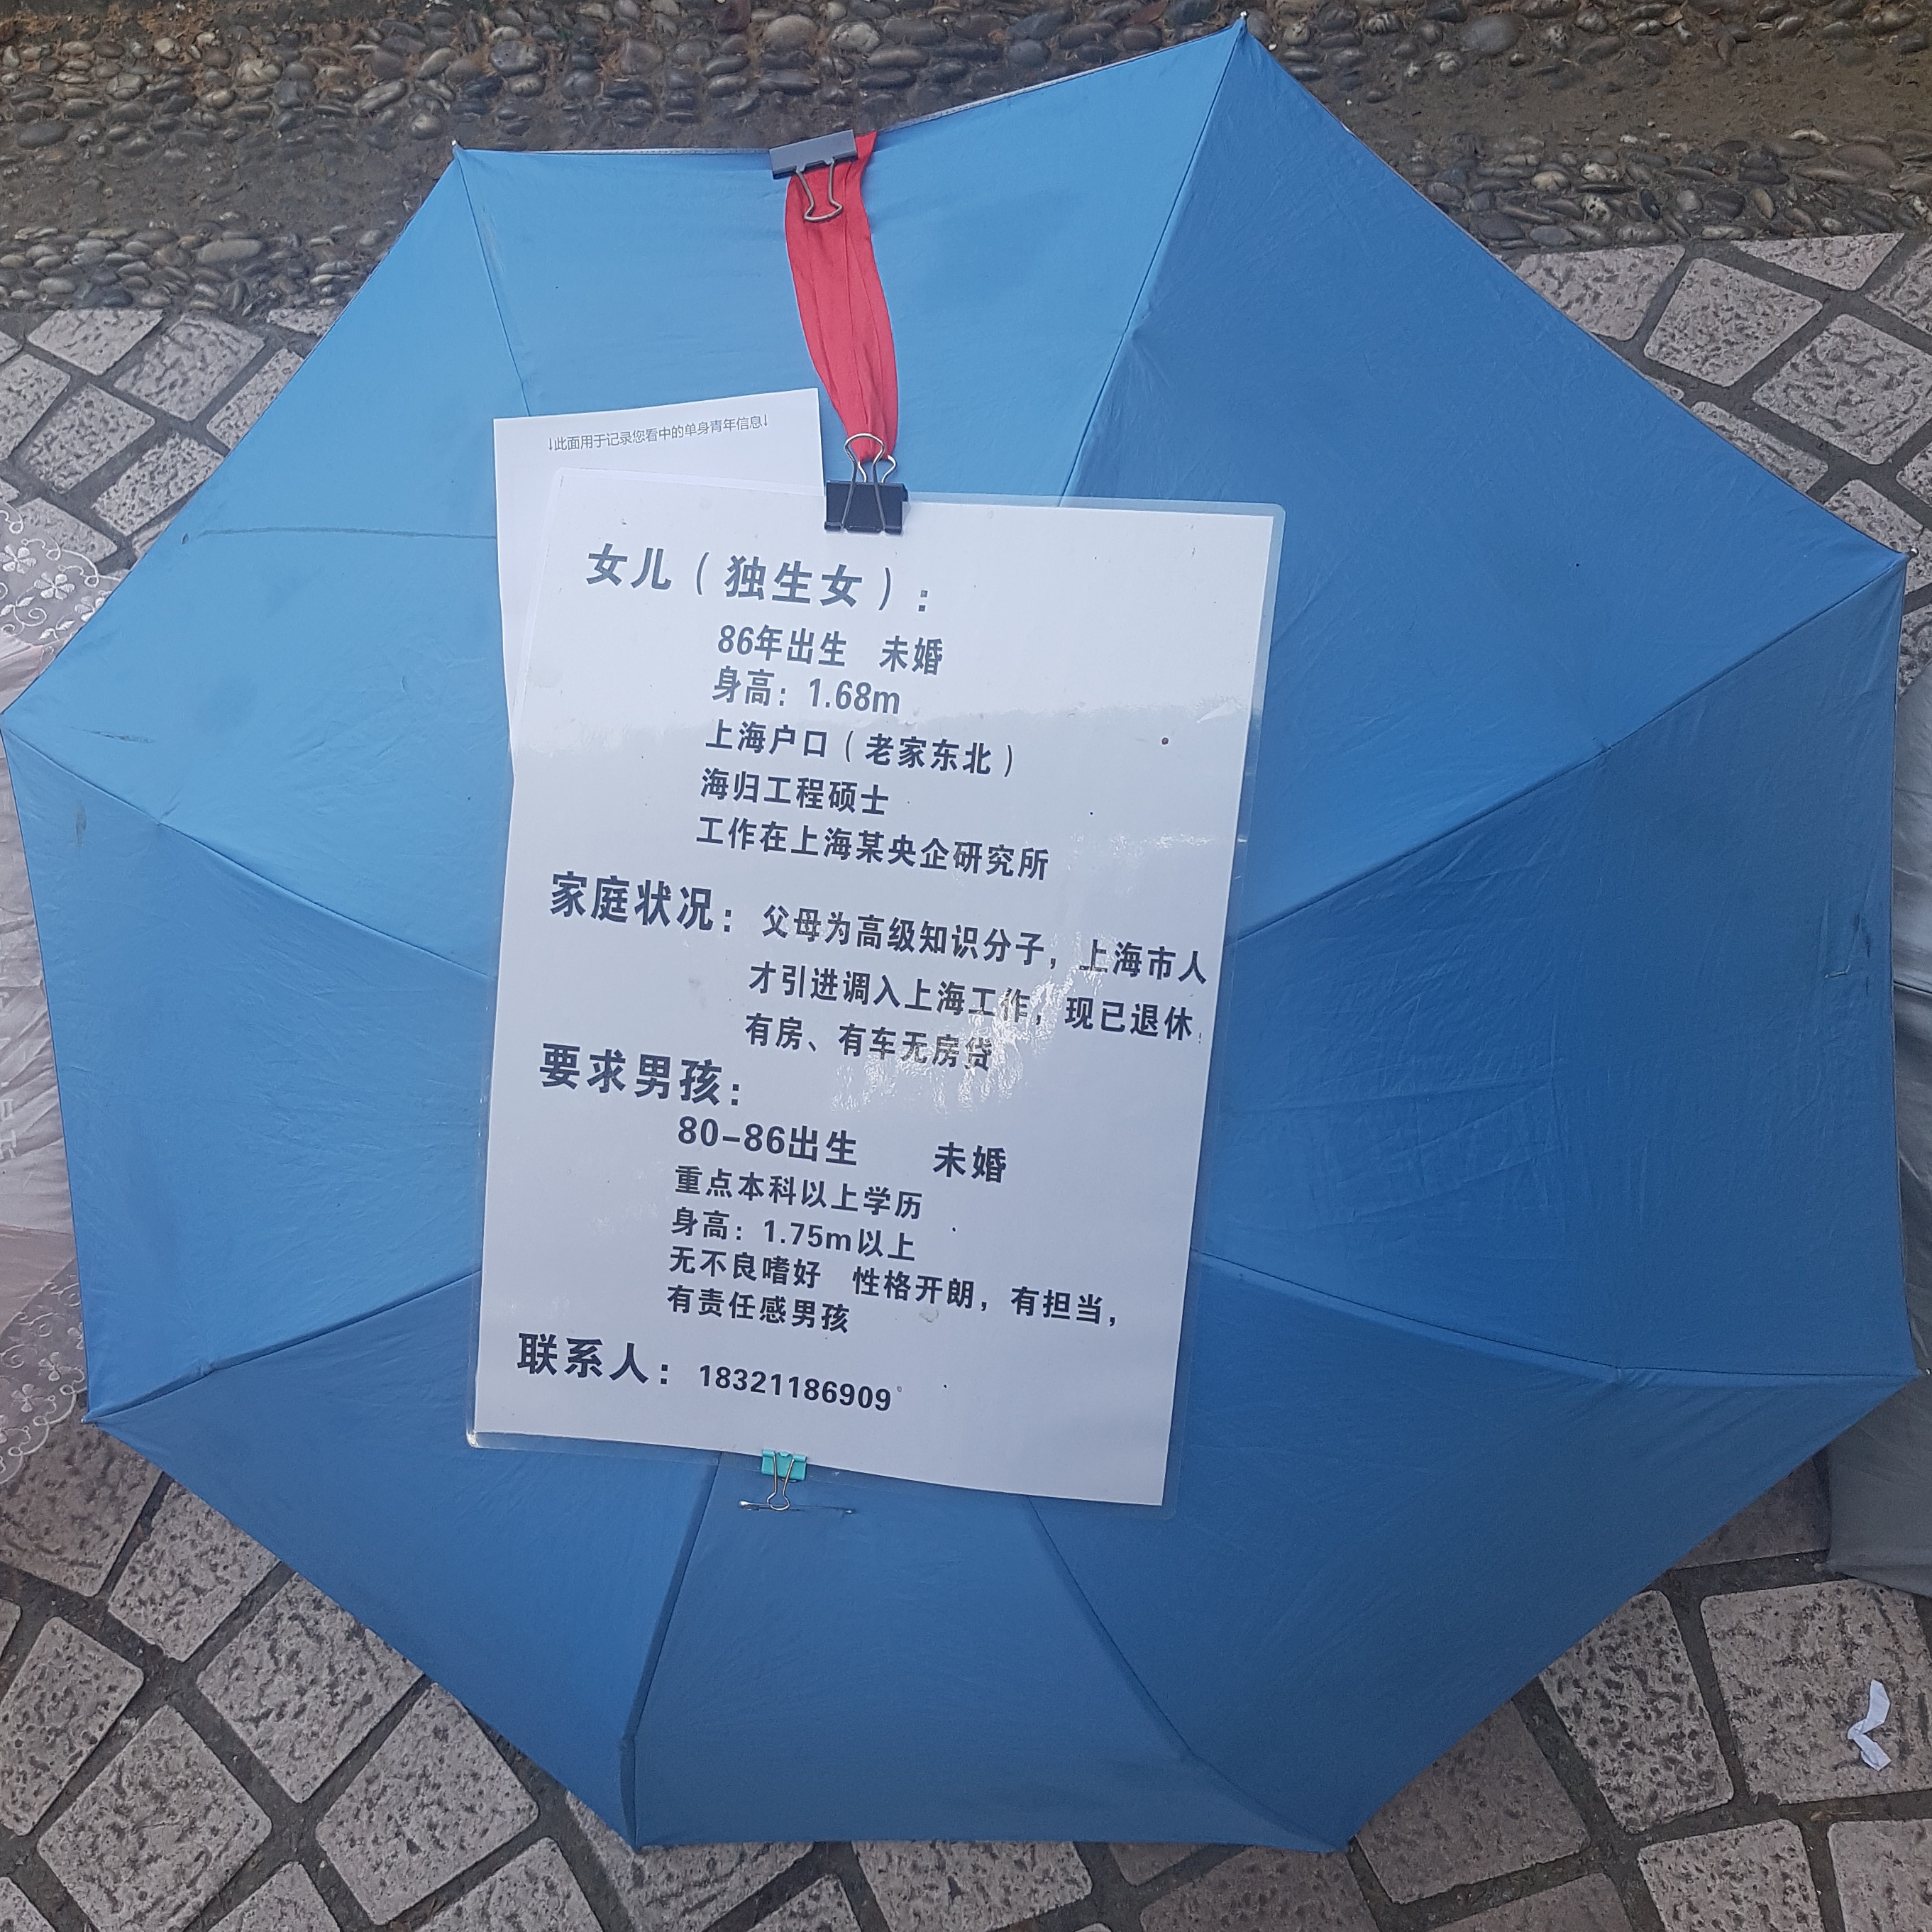 Umbrella info